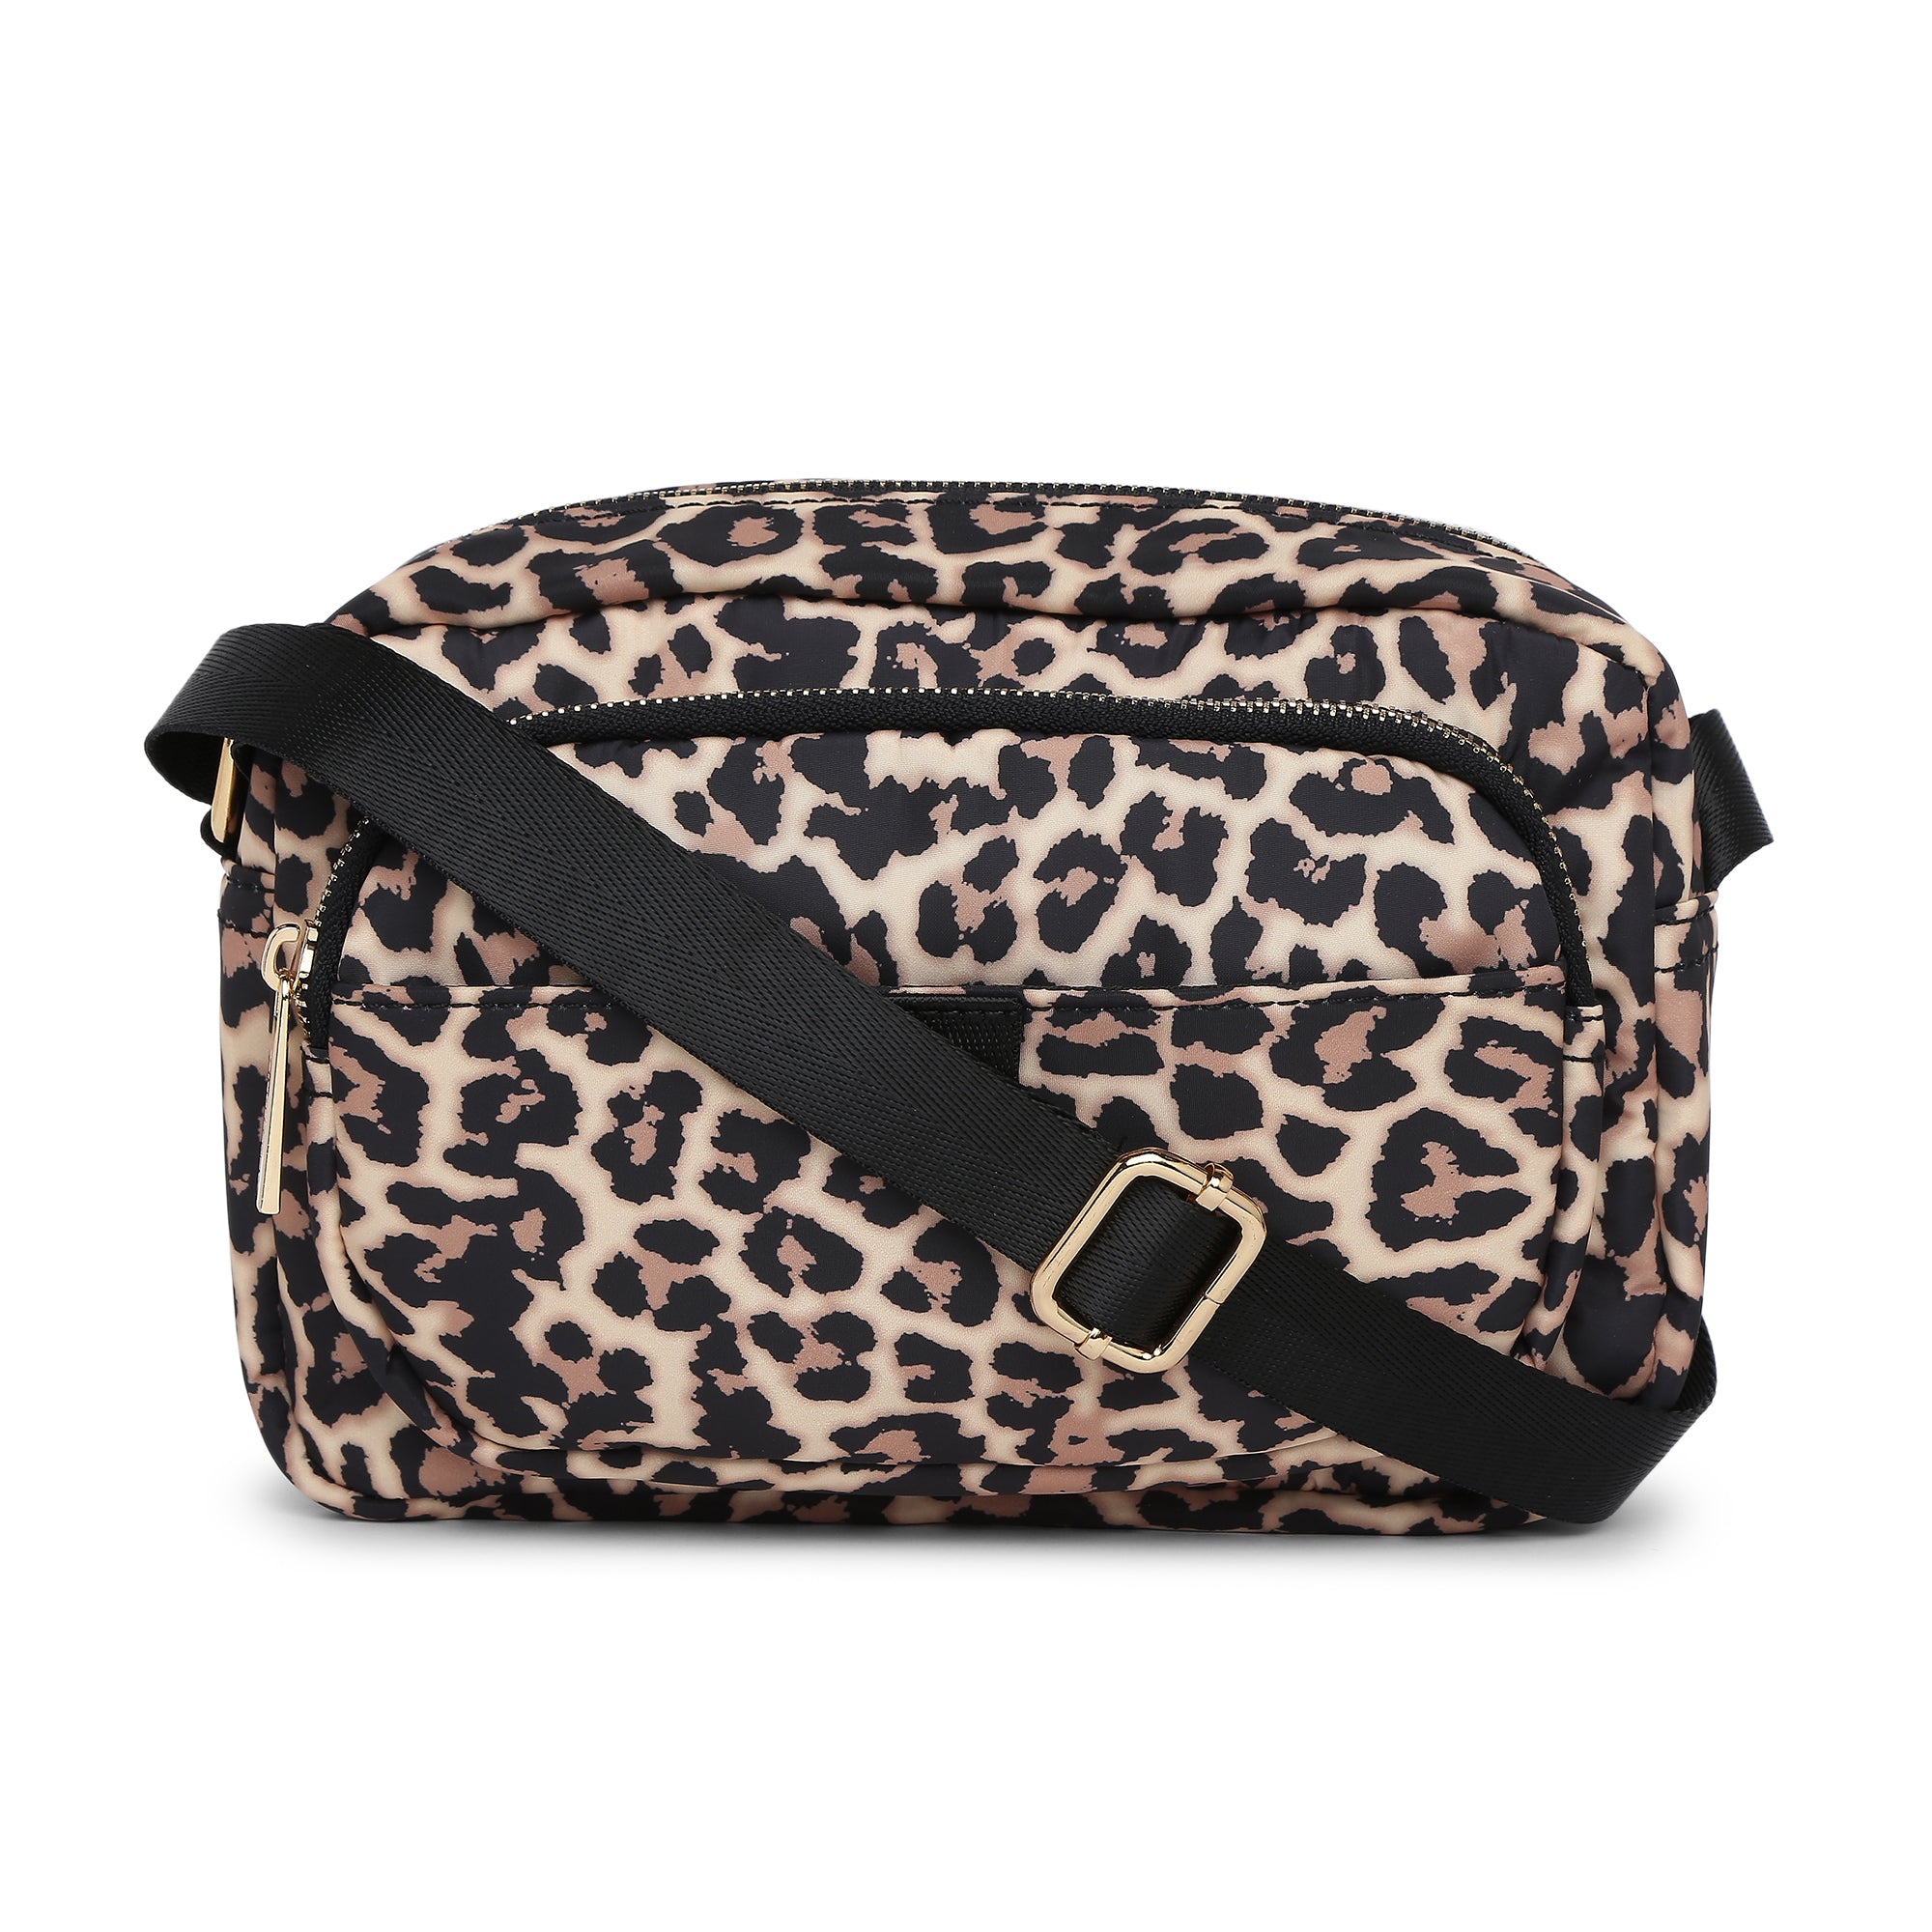 XOXO Animal Print Handbags | Mercari